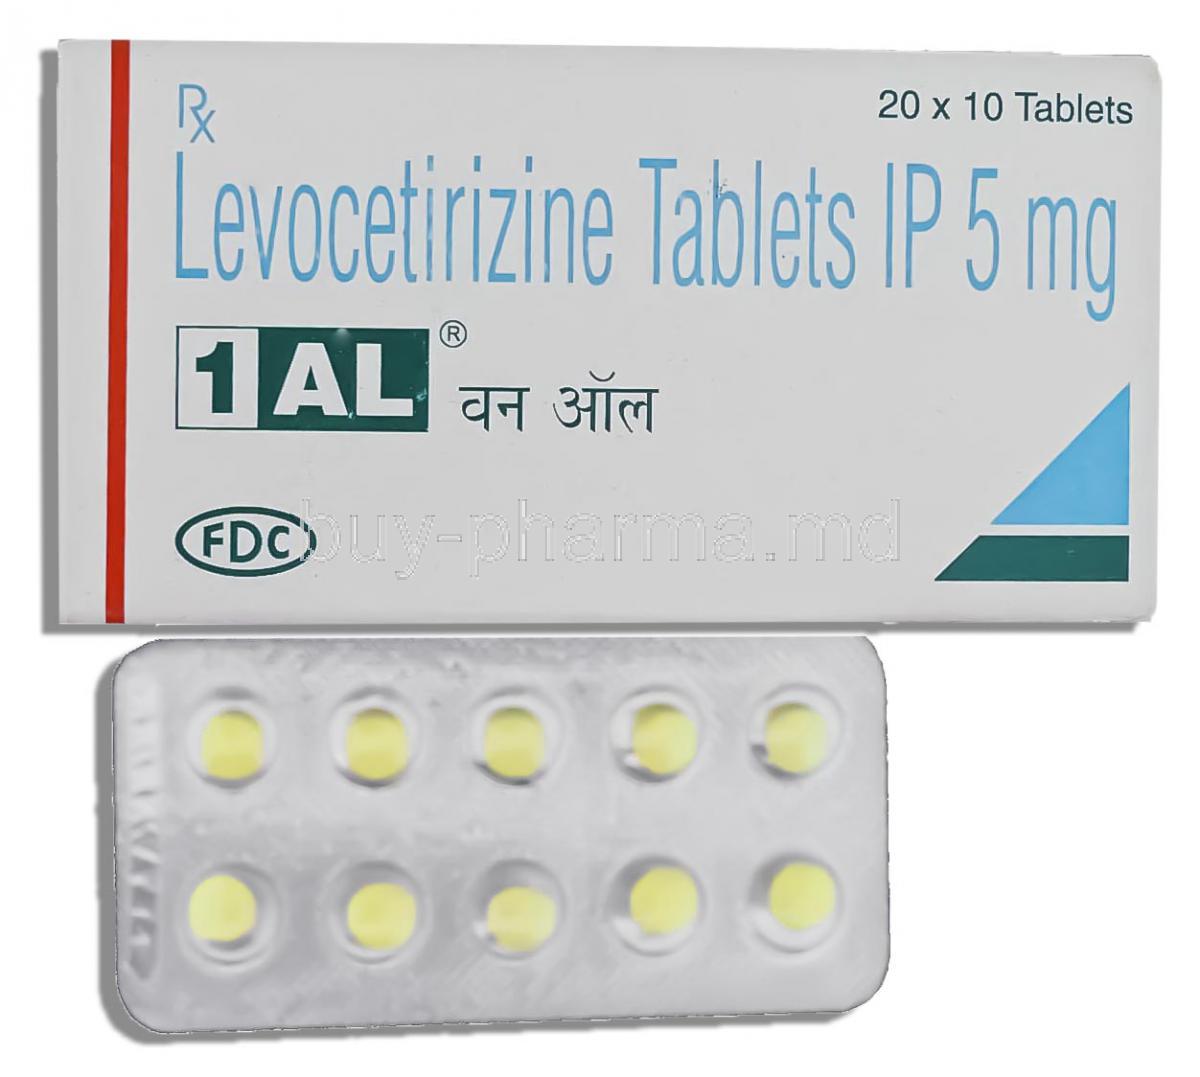 AL, Levocetirizine Dihydrochloride 5 Mg Tablet (FDC)